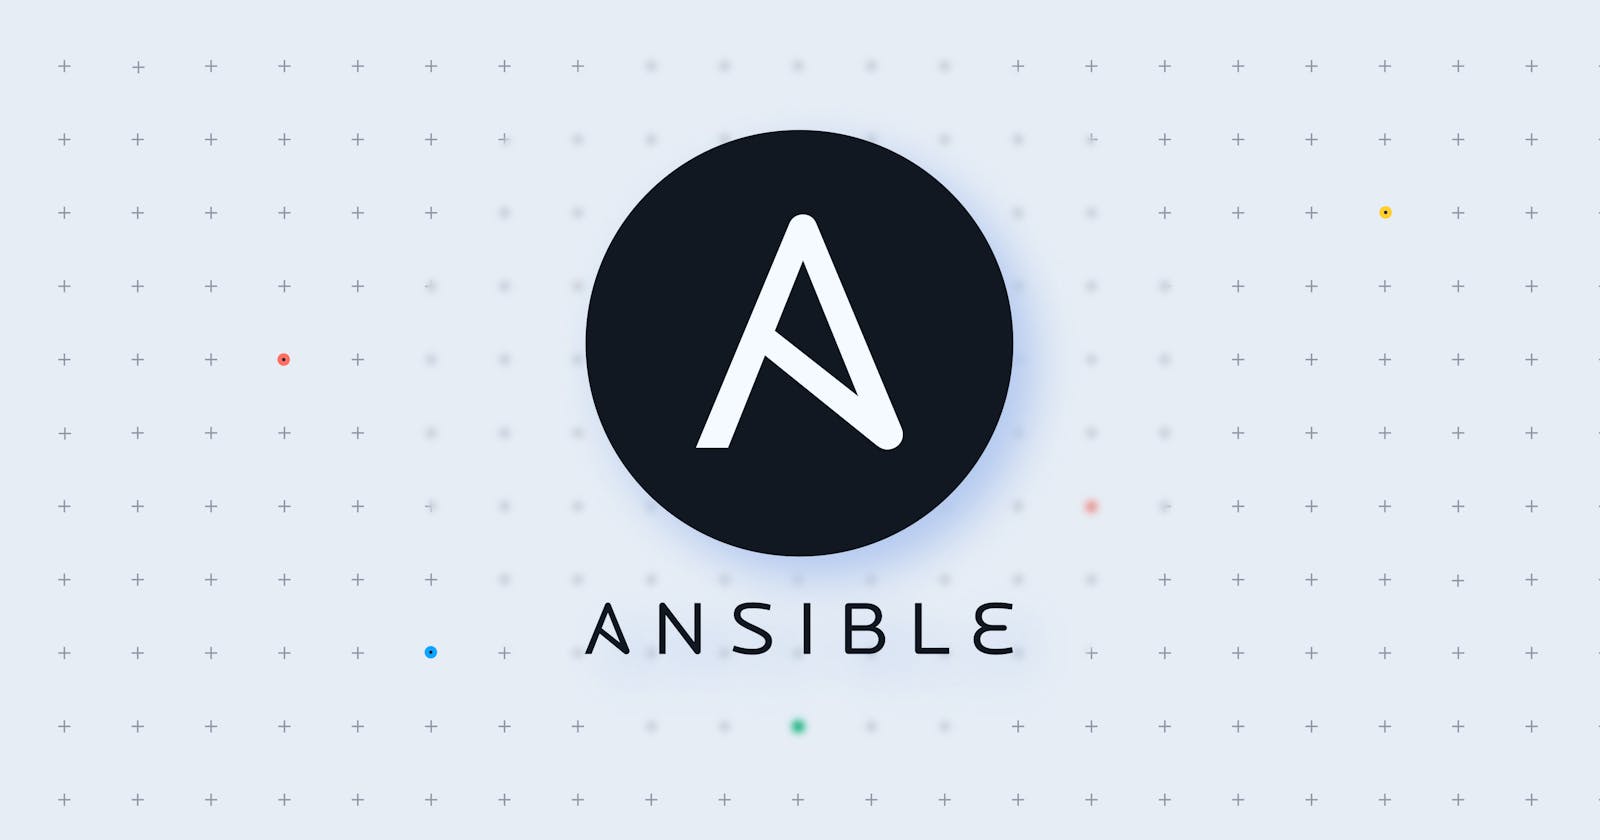 Let's dive into Ansible - P2